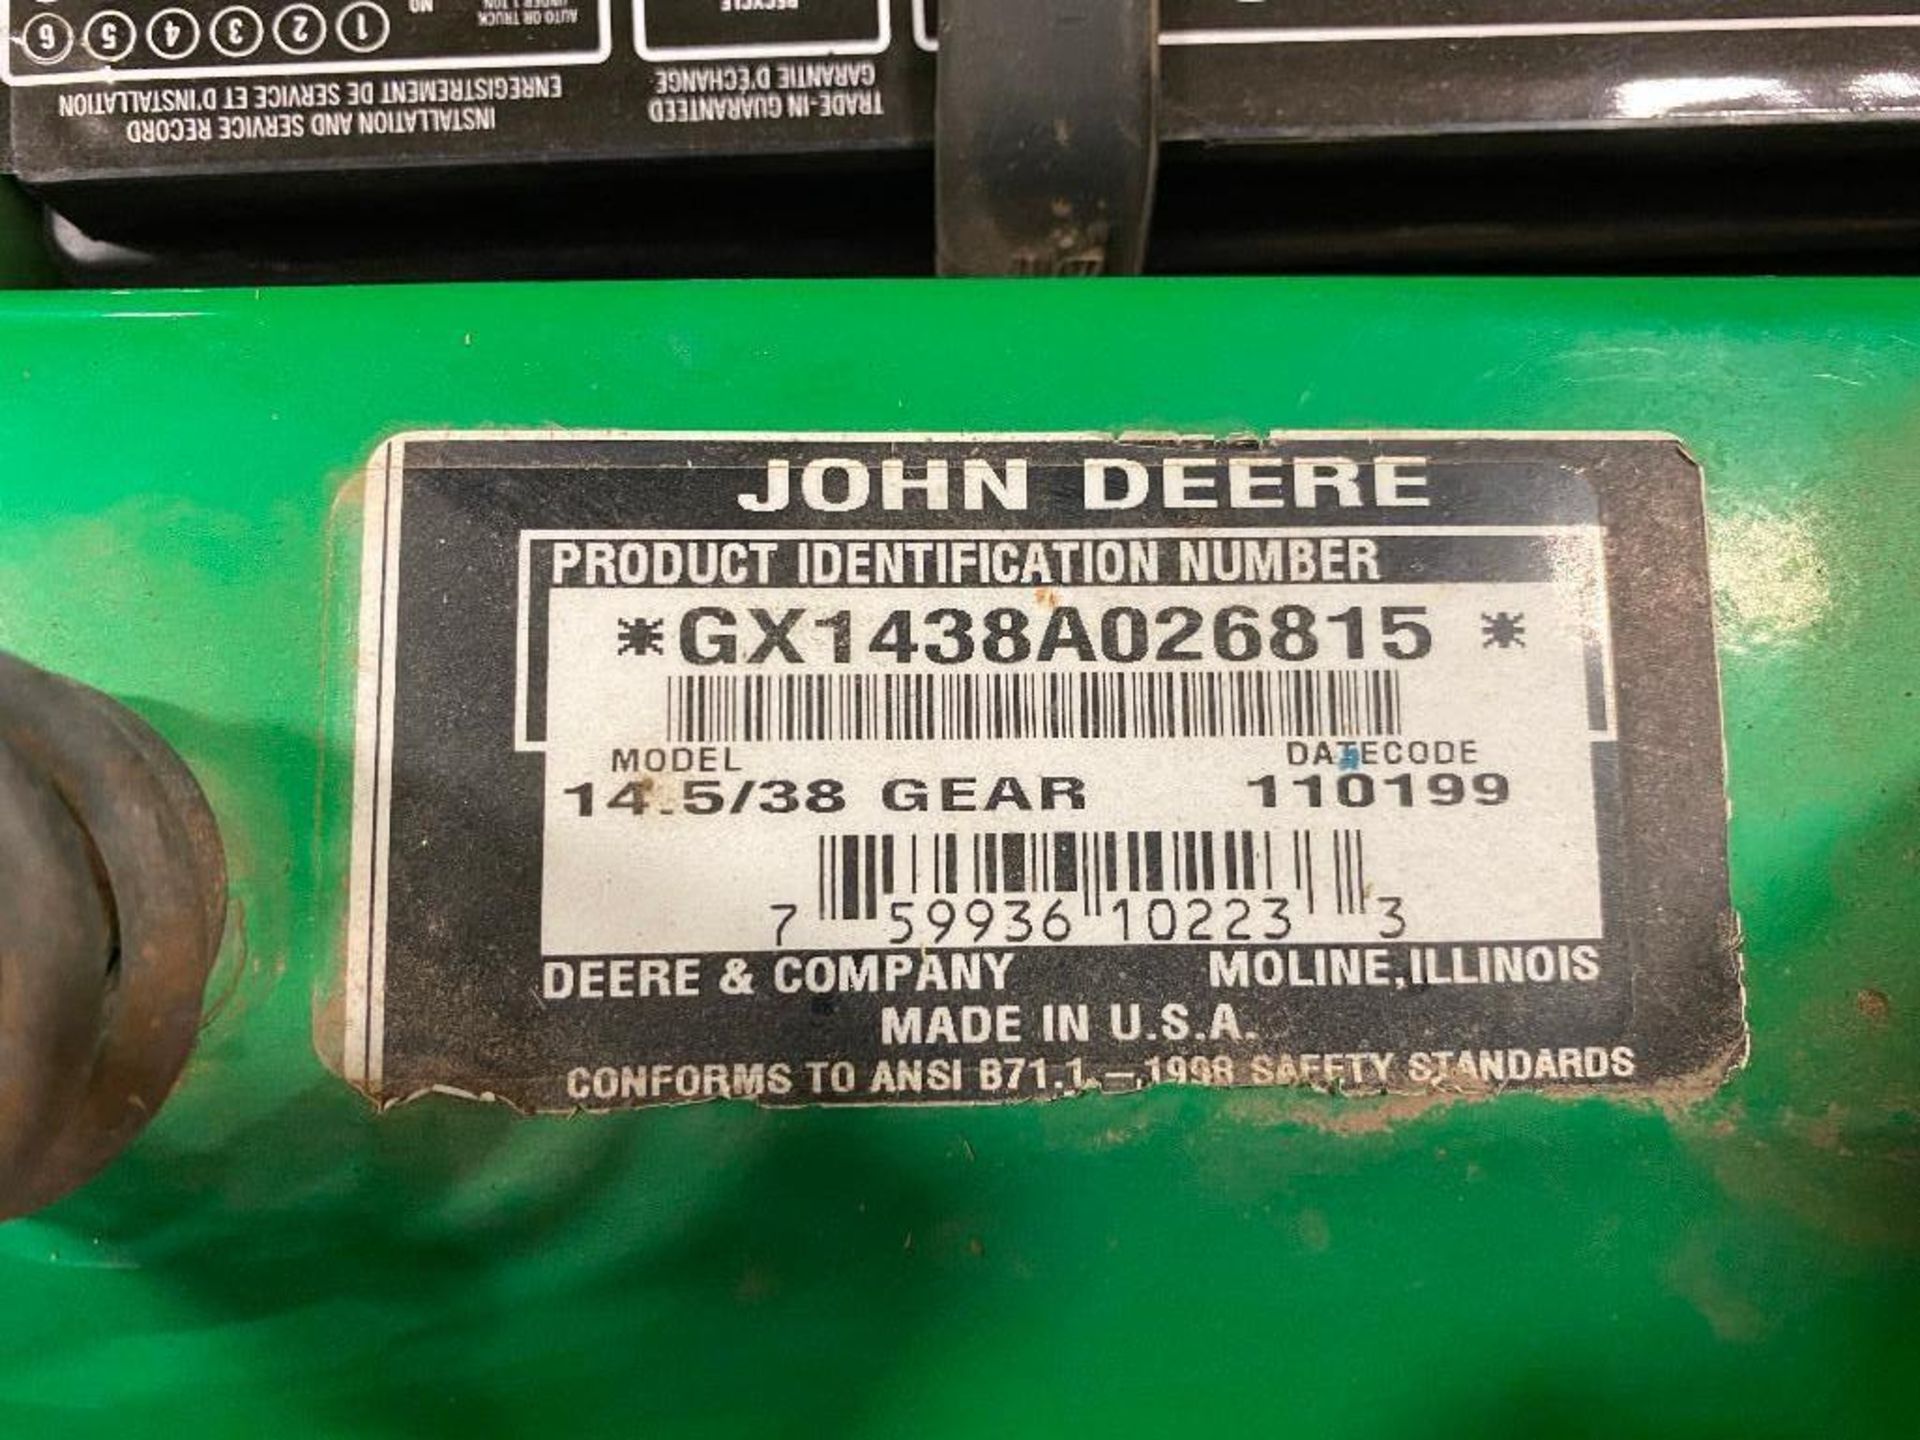 John Deere Sabre Ride Lawn Mower, , Model14.5/38, Serial: GX1438A026815 - Image 7 of 8